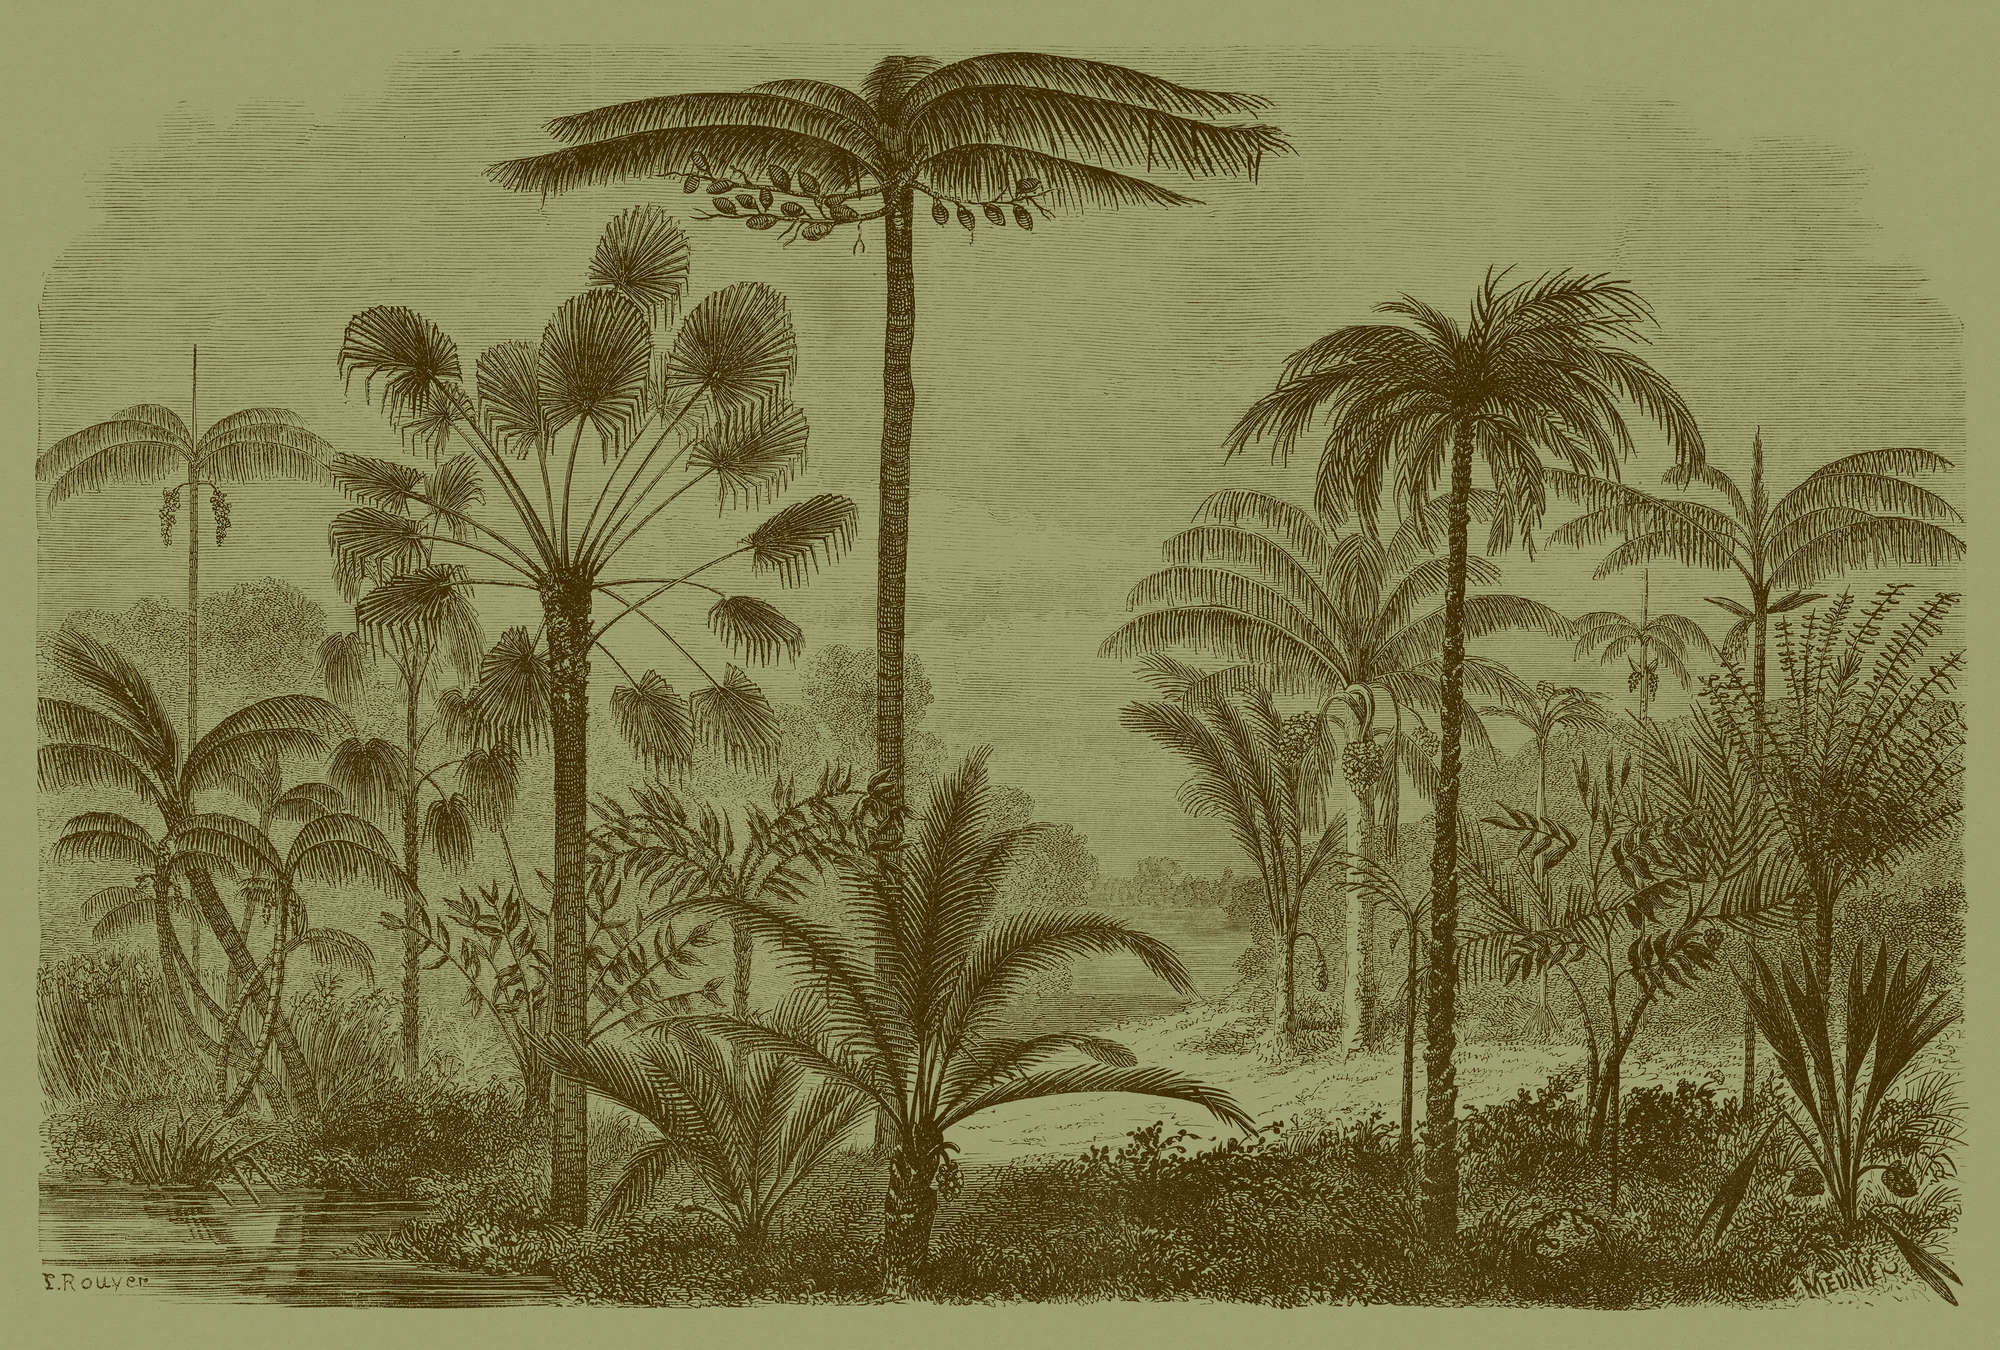             Jurassic 1 - Digital behang jungle motief kopergravure groen in kartonnen structuur - Bruin, Groen | Mat glad vlies
        